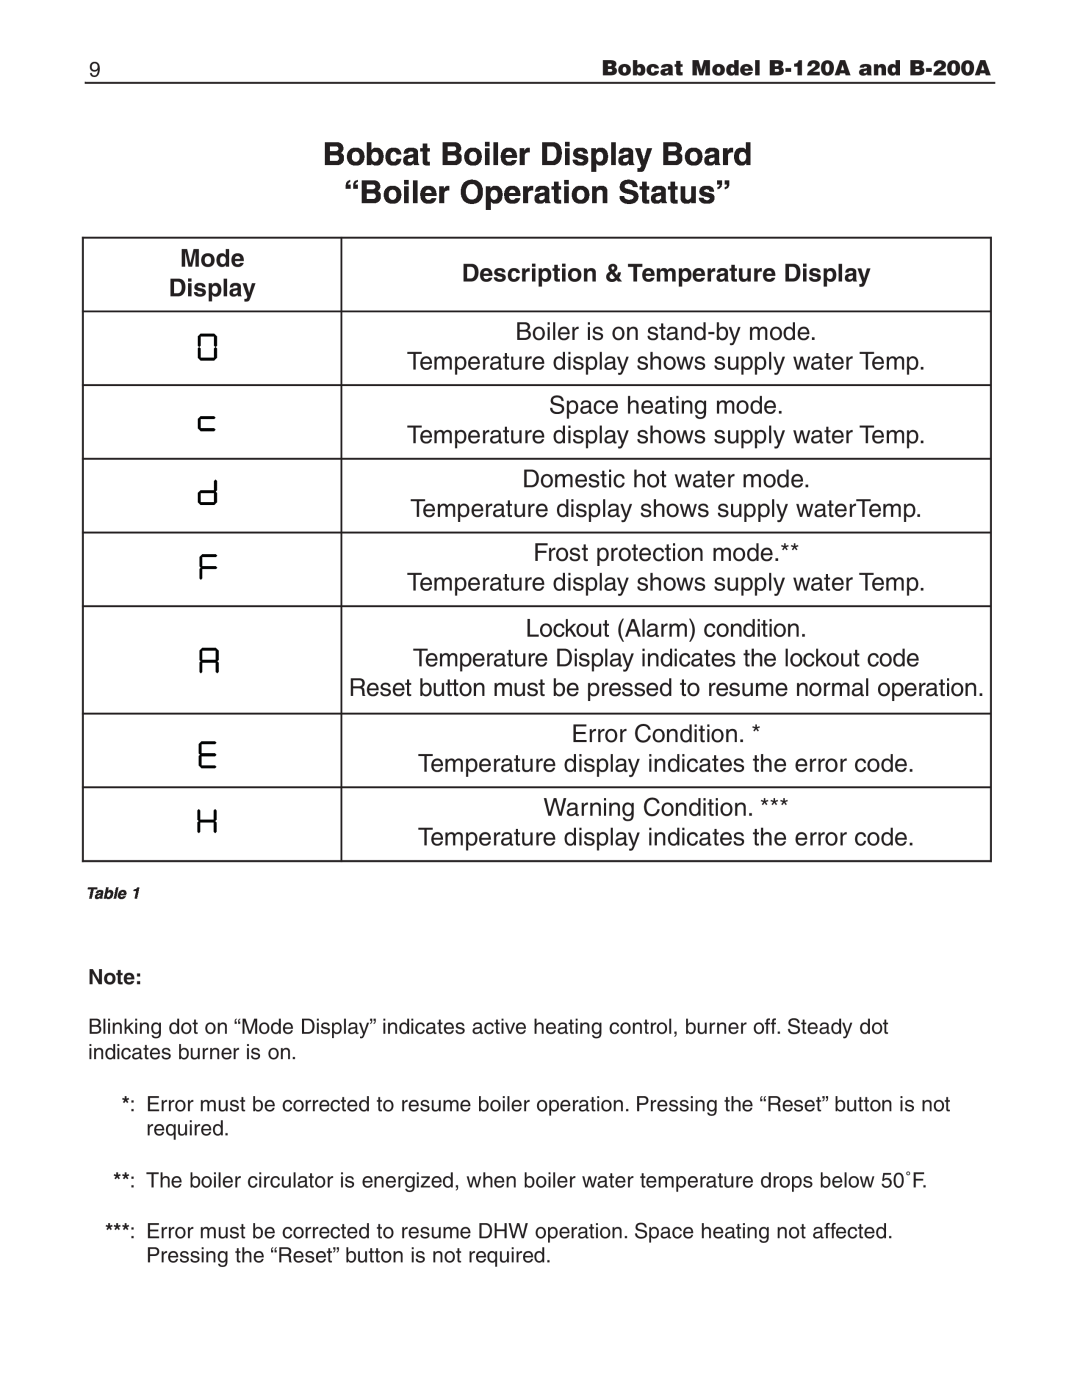 Slant/Fin B-200A Bobcat Boiler Display Board, “Boiler Operation Status”, Lockout Alarm condition, Error Condition, Mode 